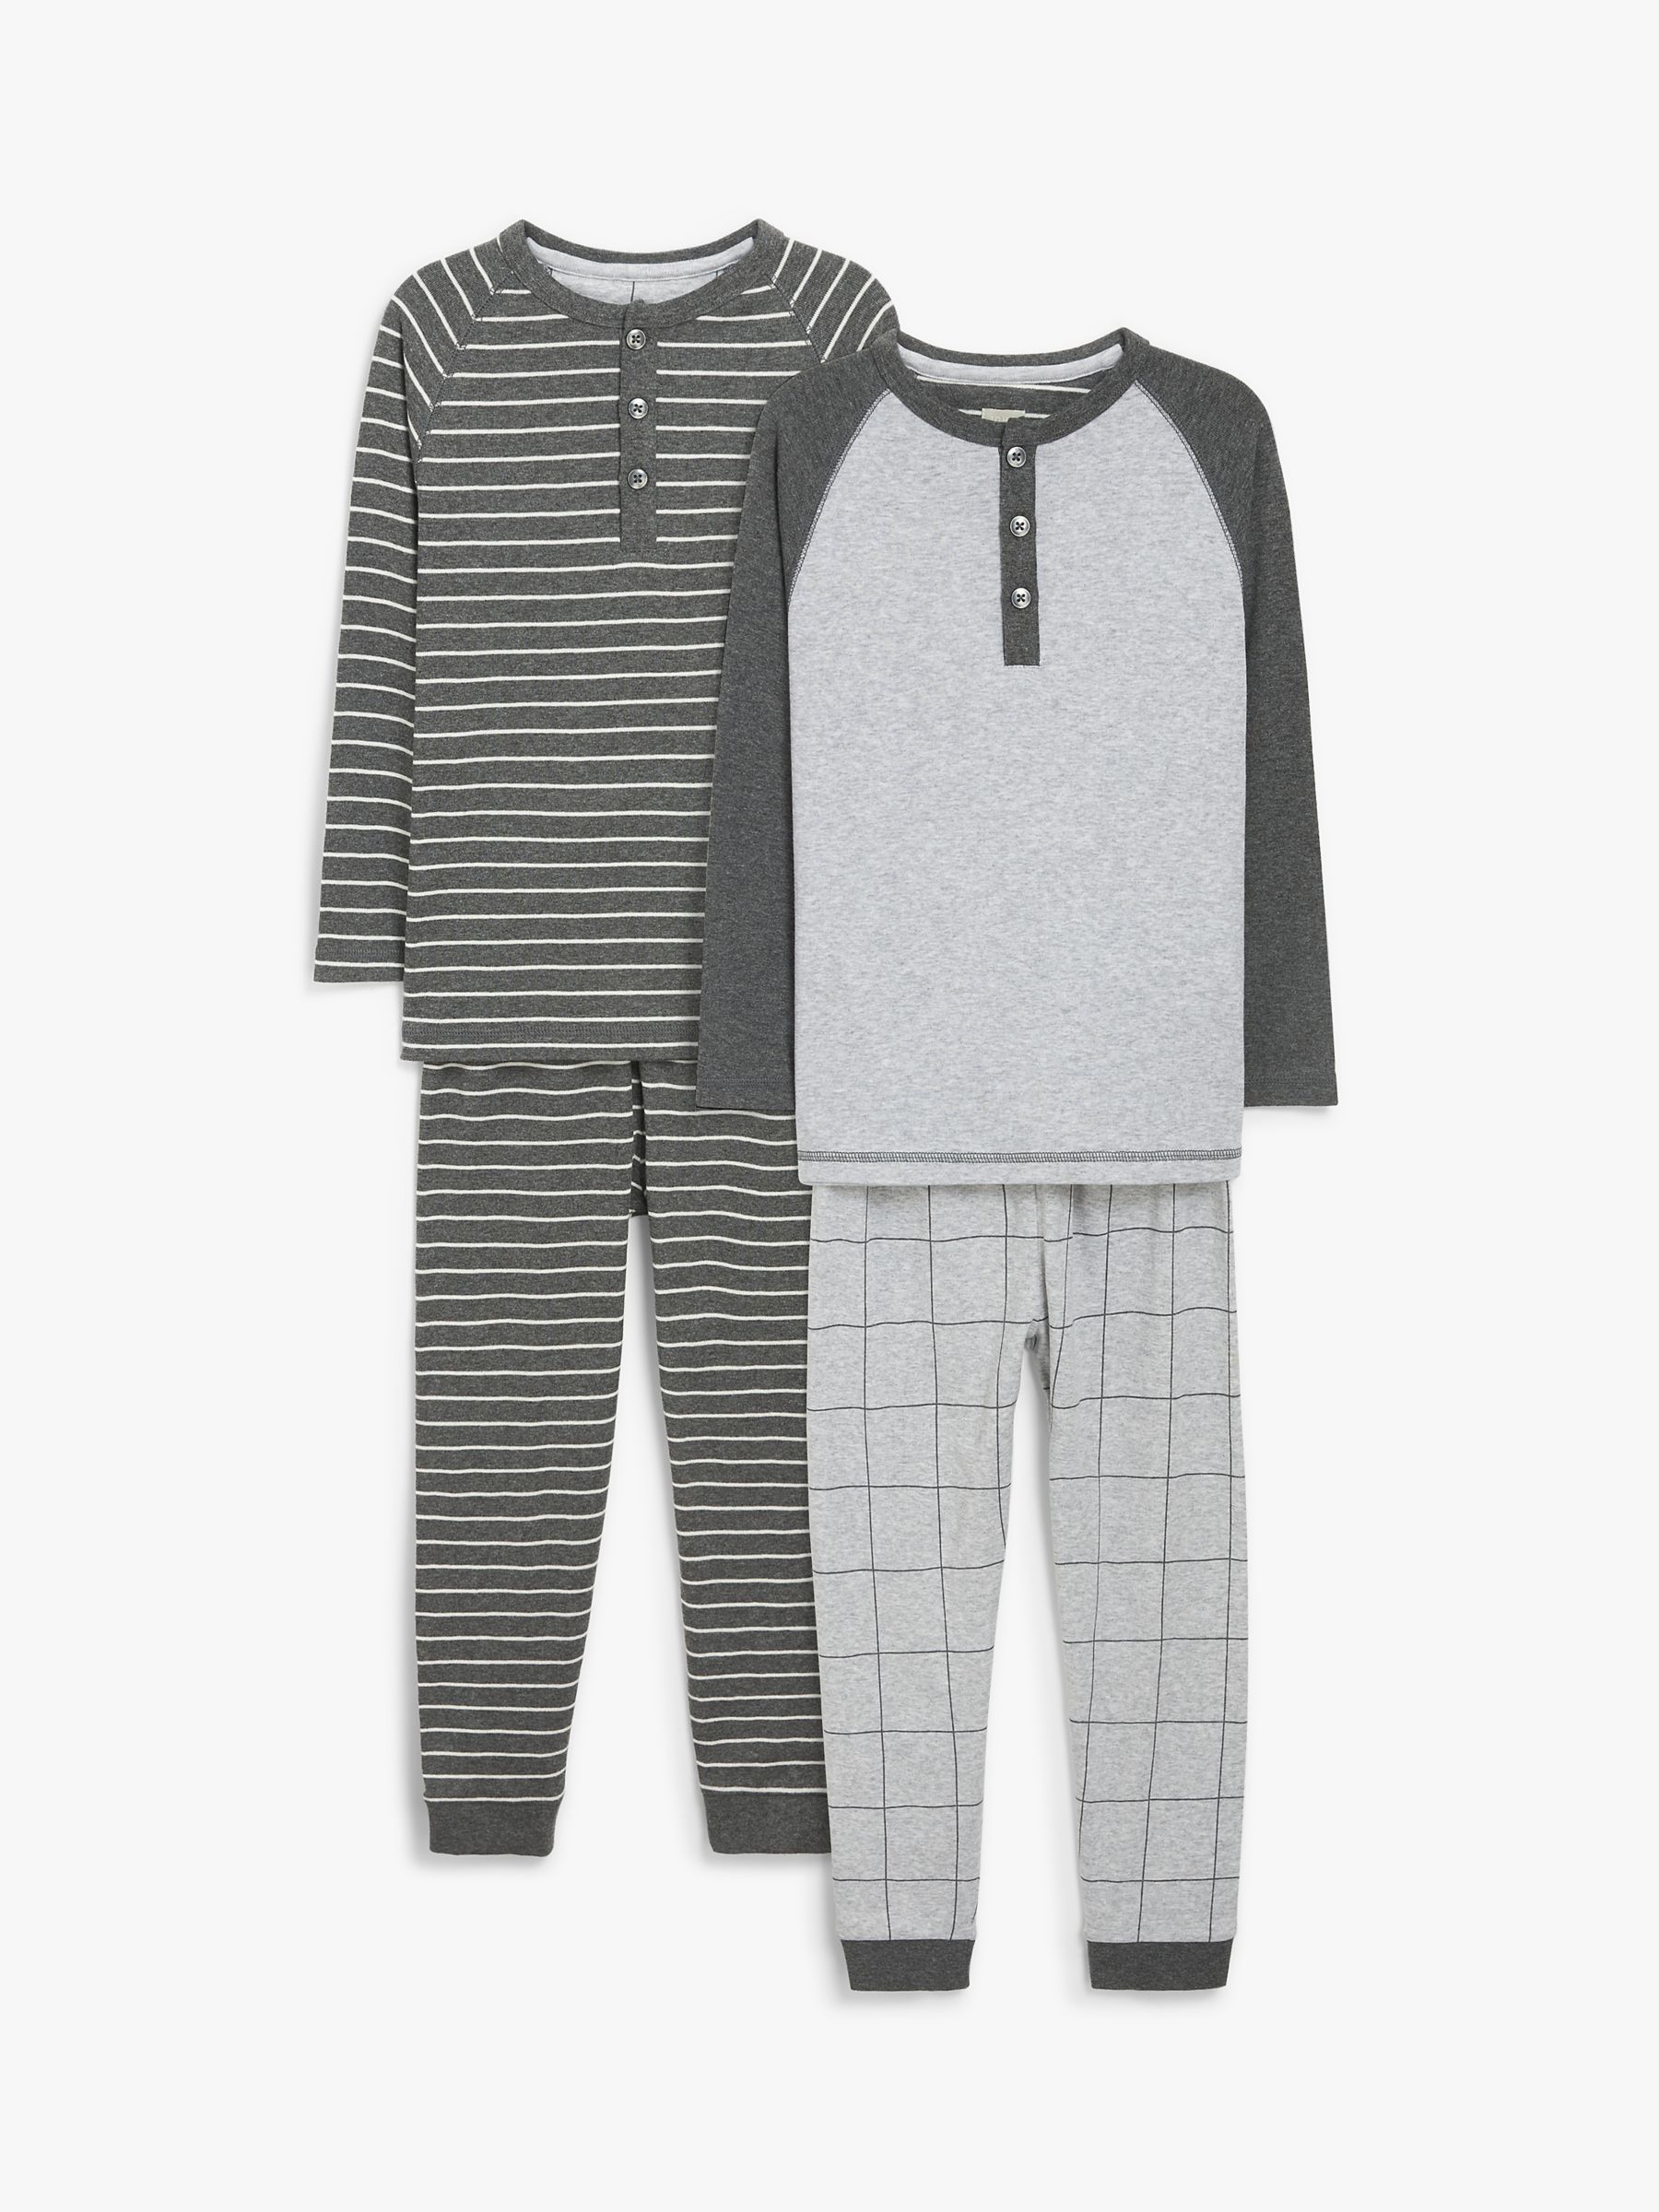 Image of John Lewis and Partners Boys Pyjamas Pack of 2 Grey